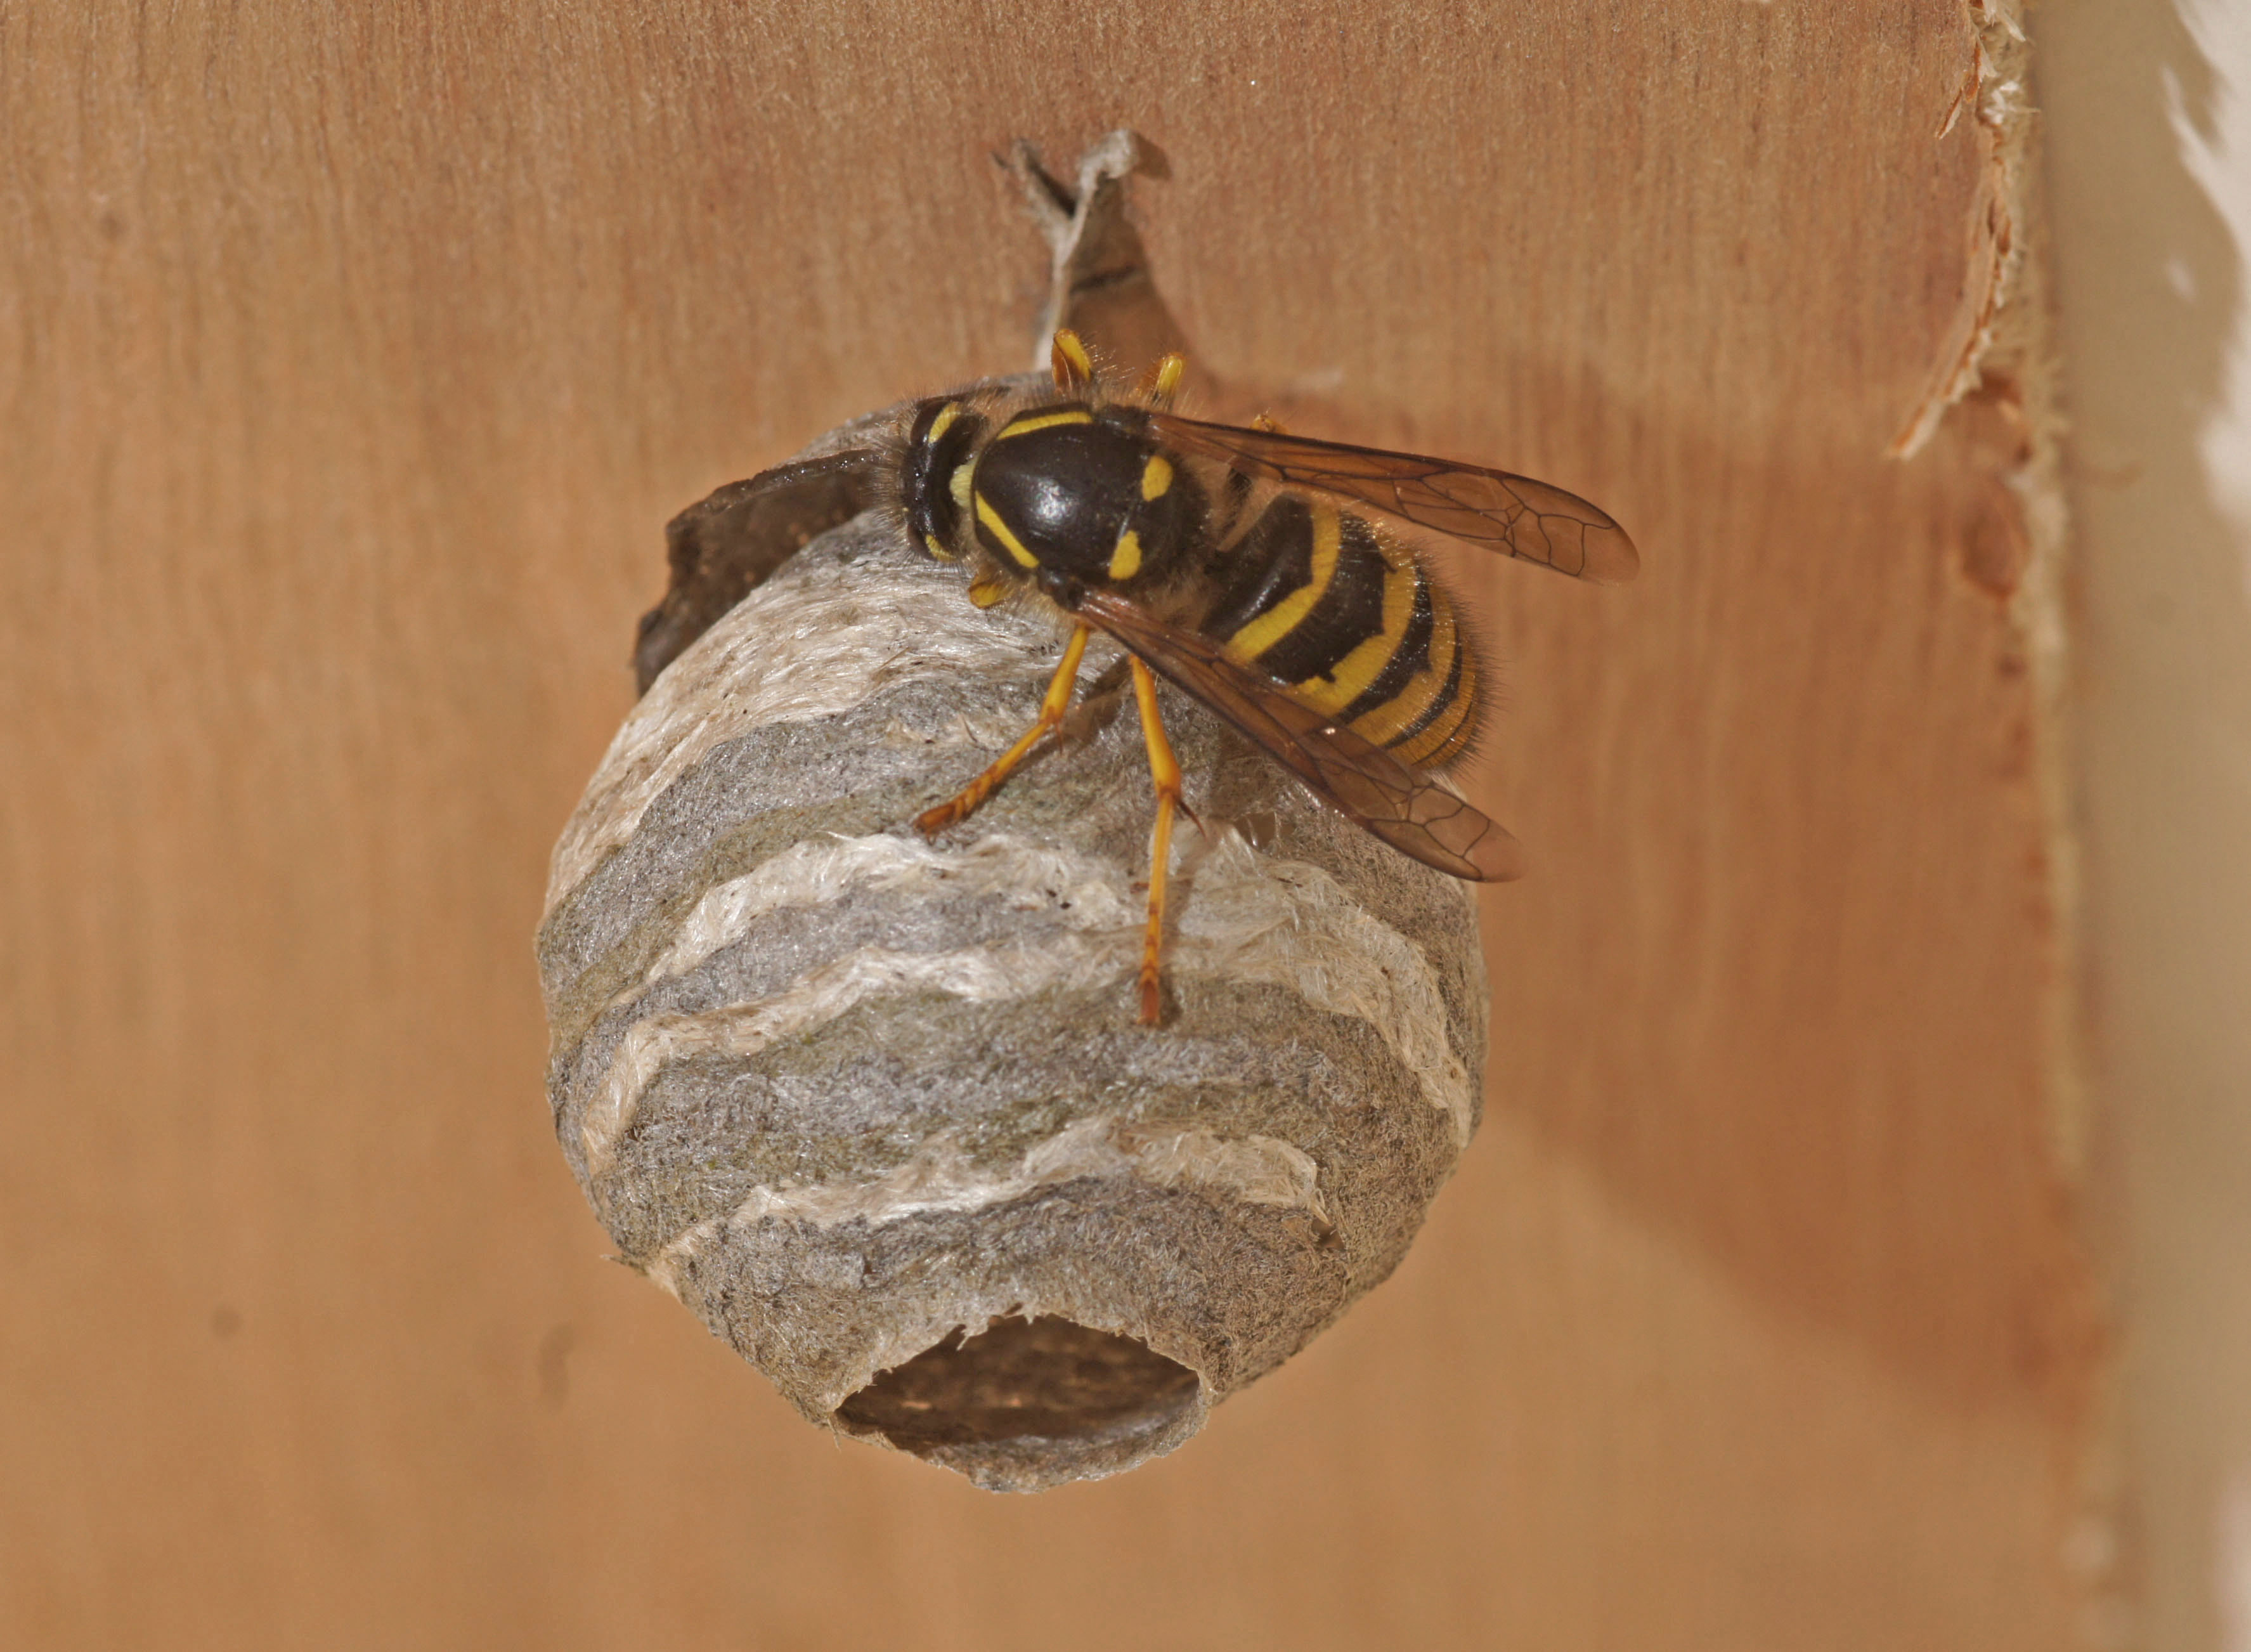 NaturePlus: Will this wasp nest get any bigger ?